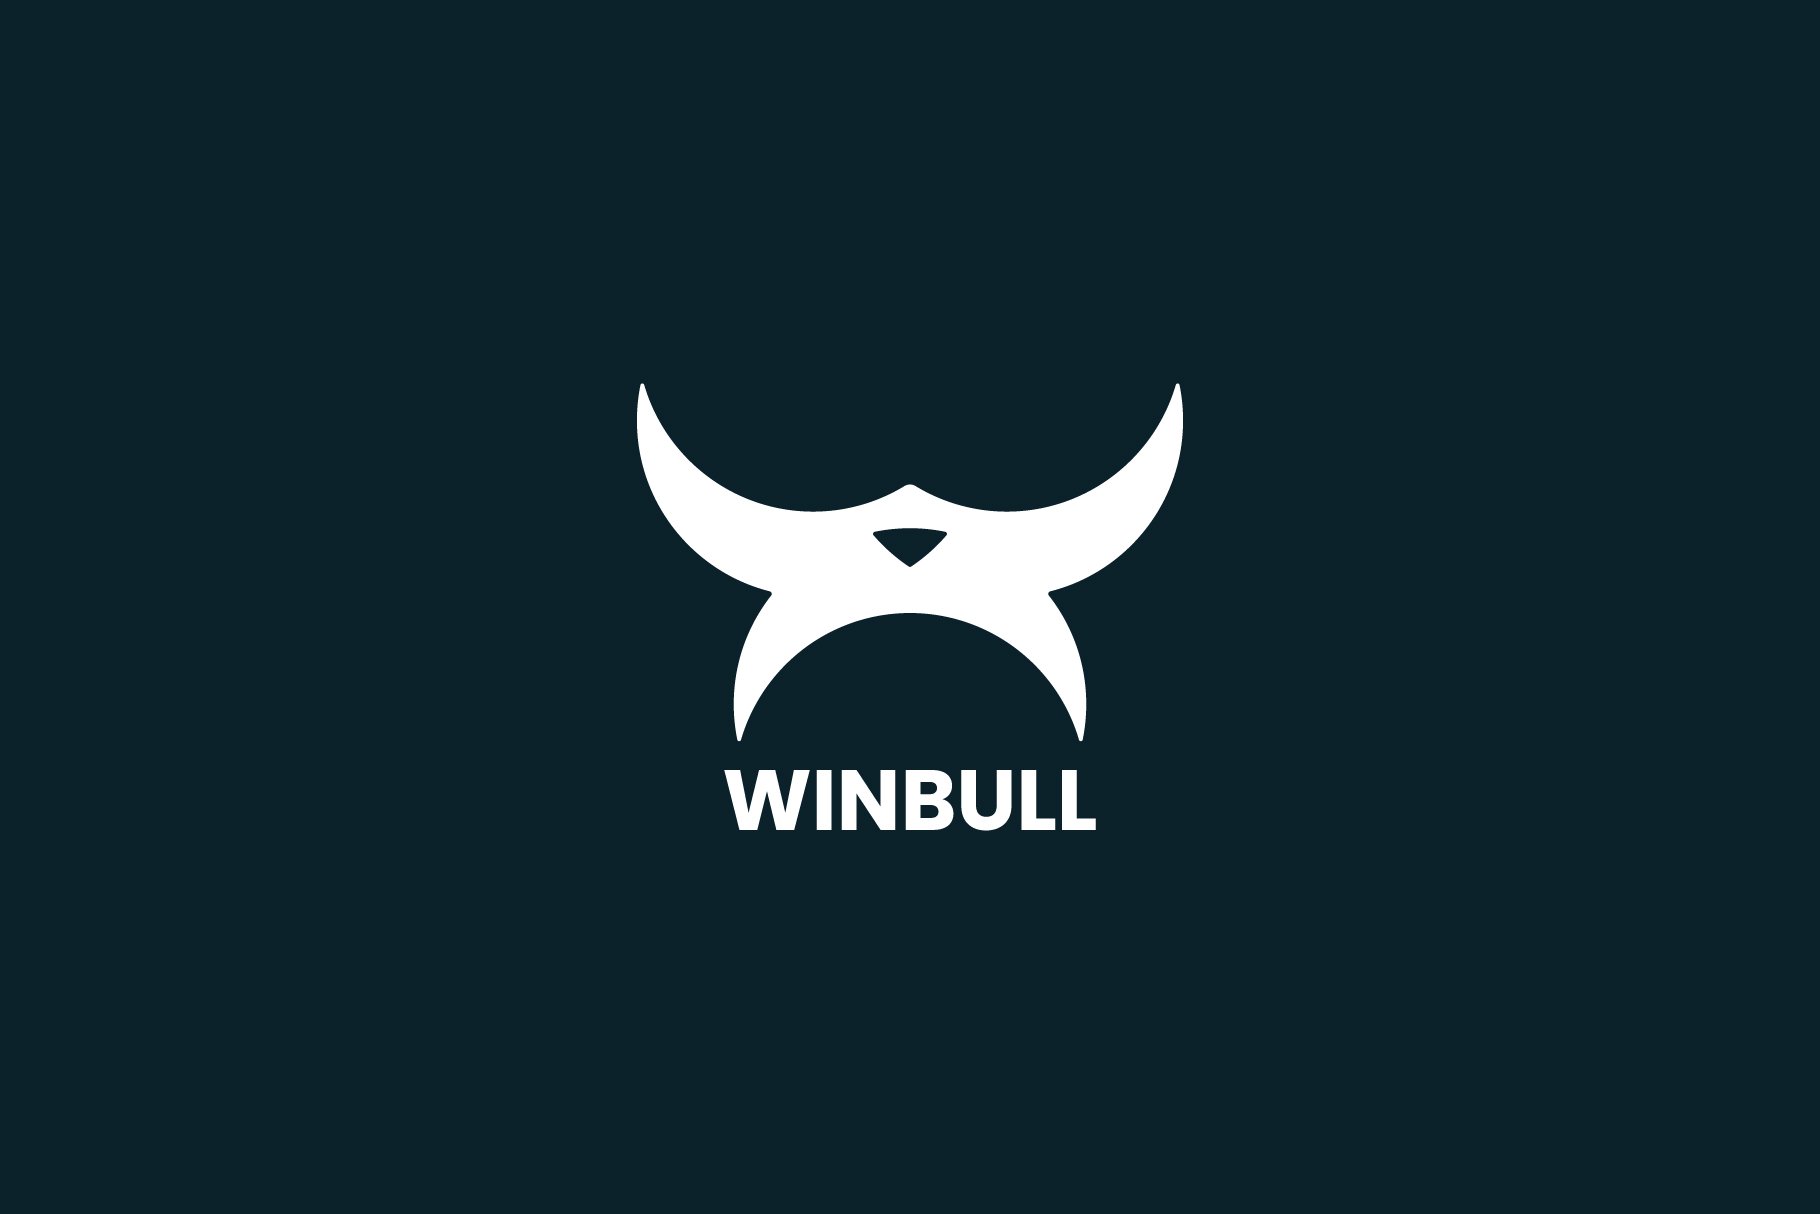 WinBull logo cover image.